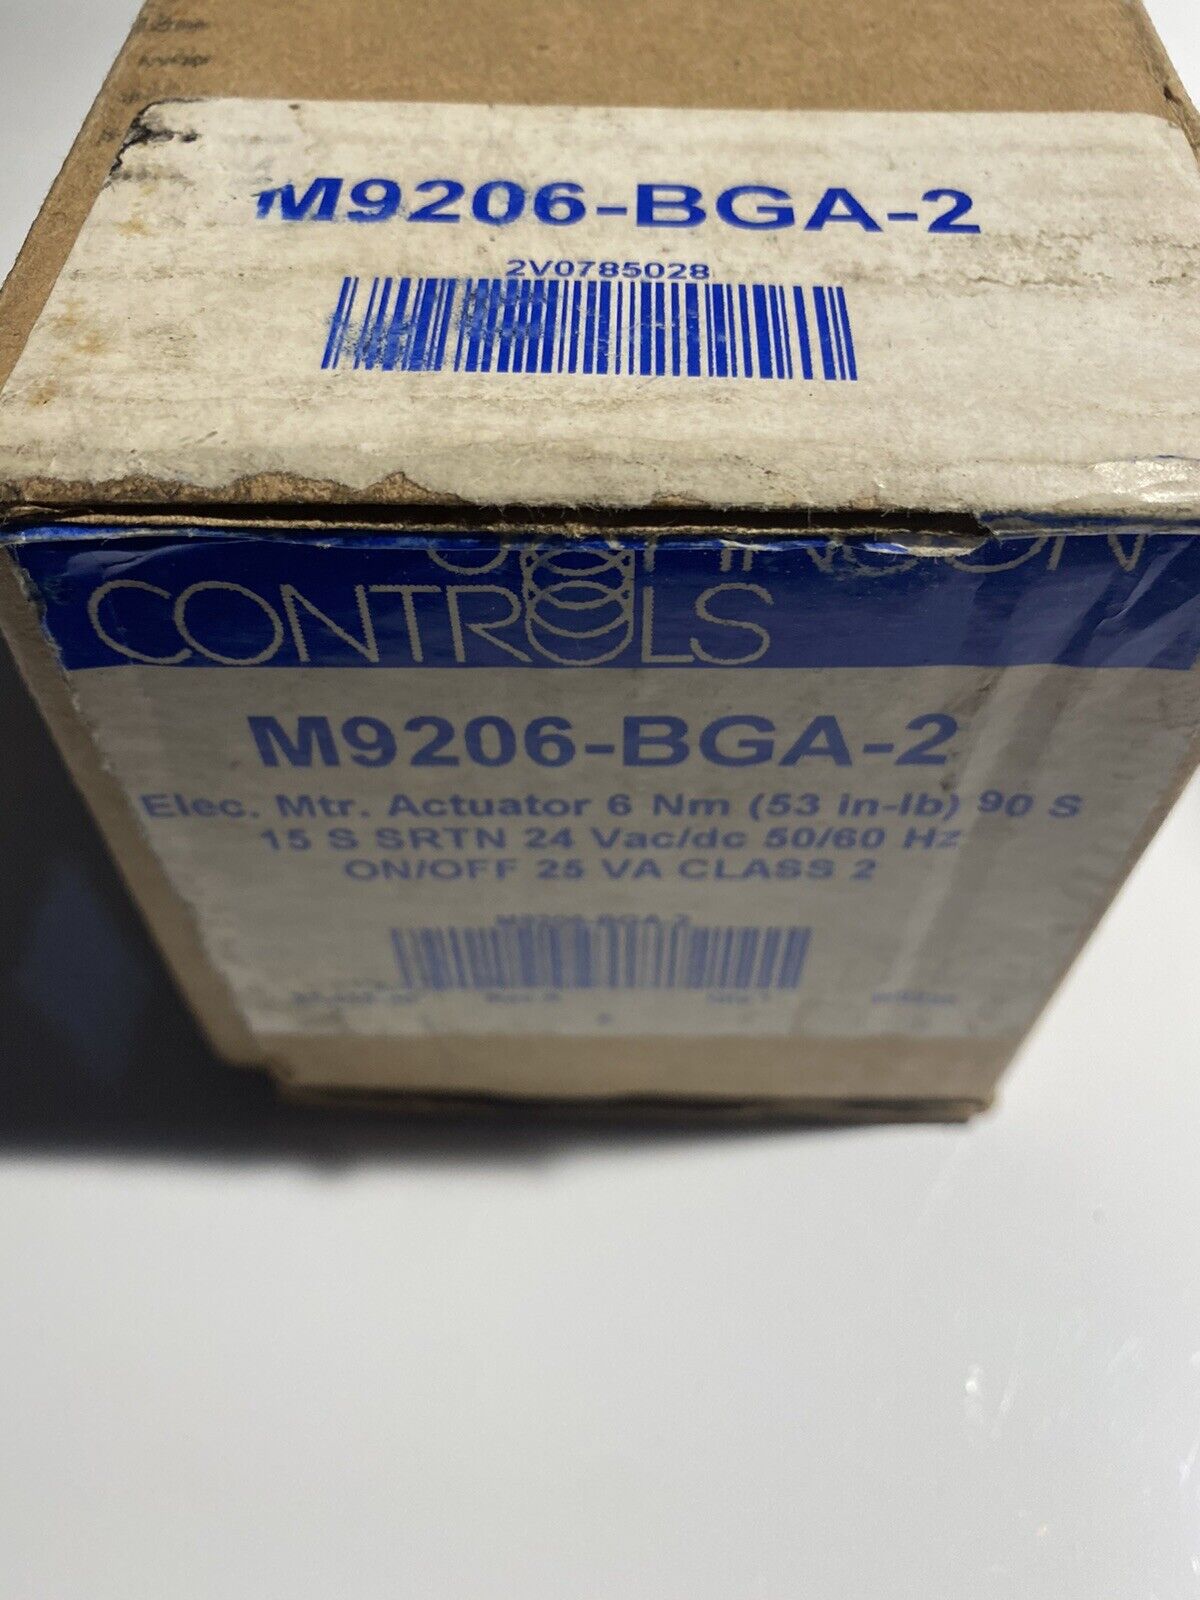 m9206-bga-2… Johnson Controls Actuator. New Open Box